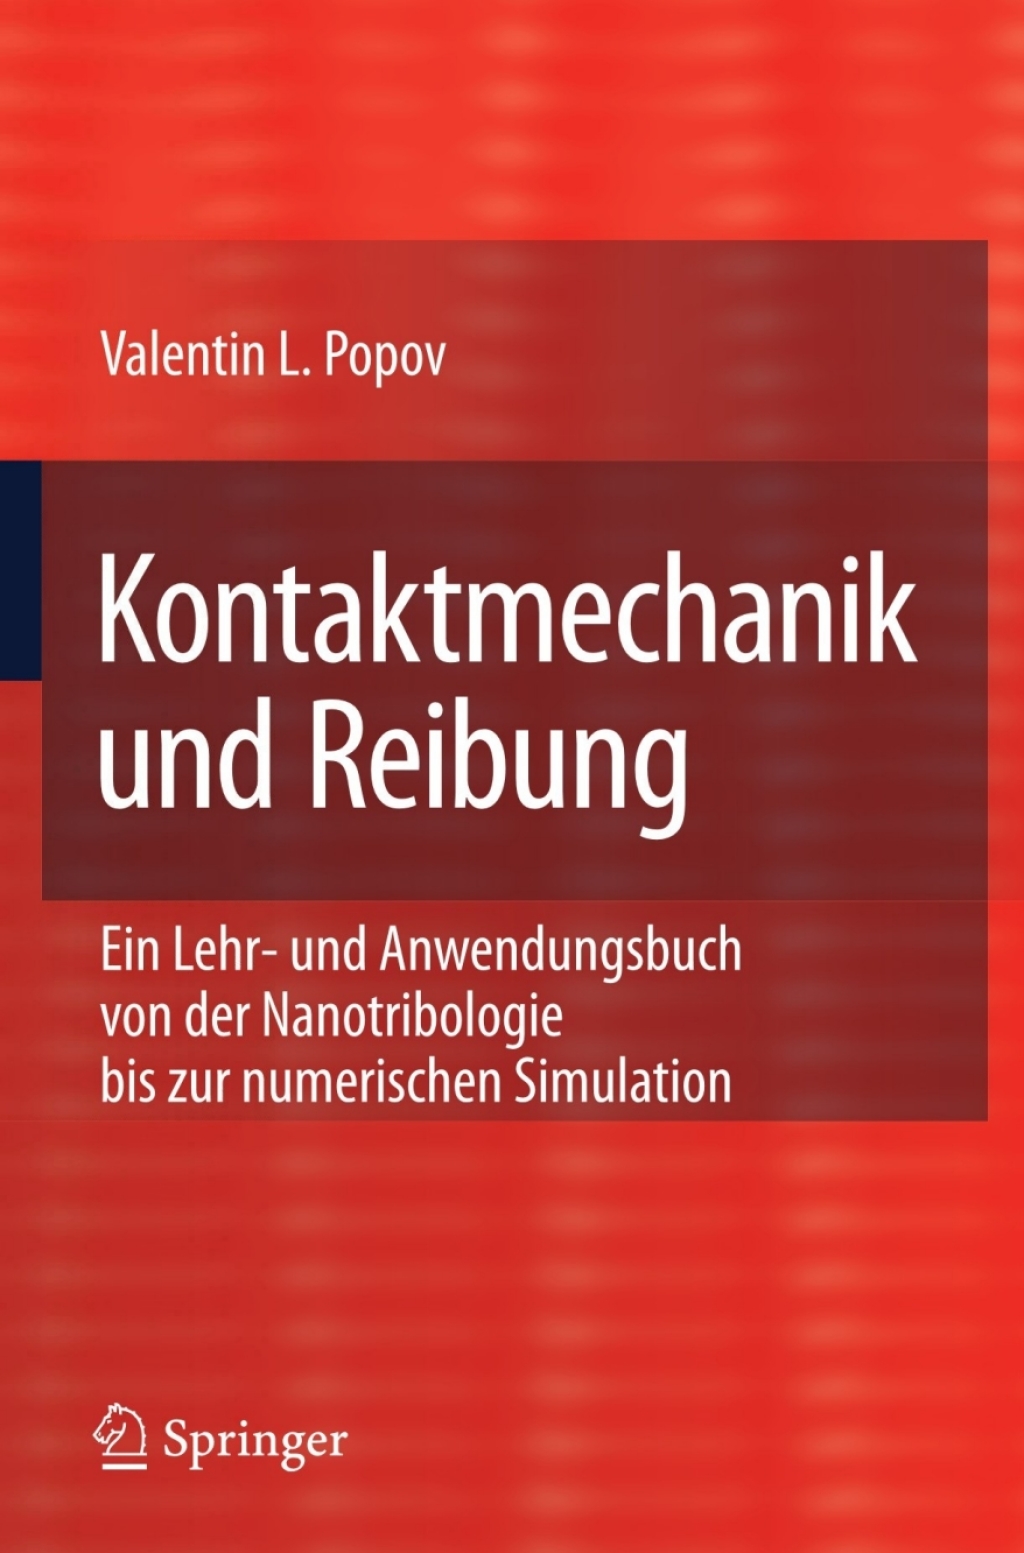 Kontaktmechanik und Reibung (eBook) - Valentin L. Popov,